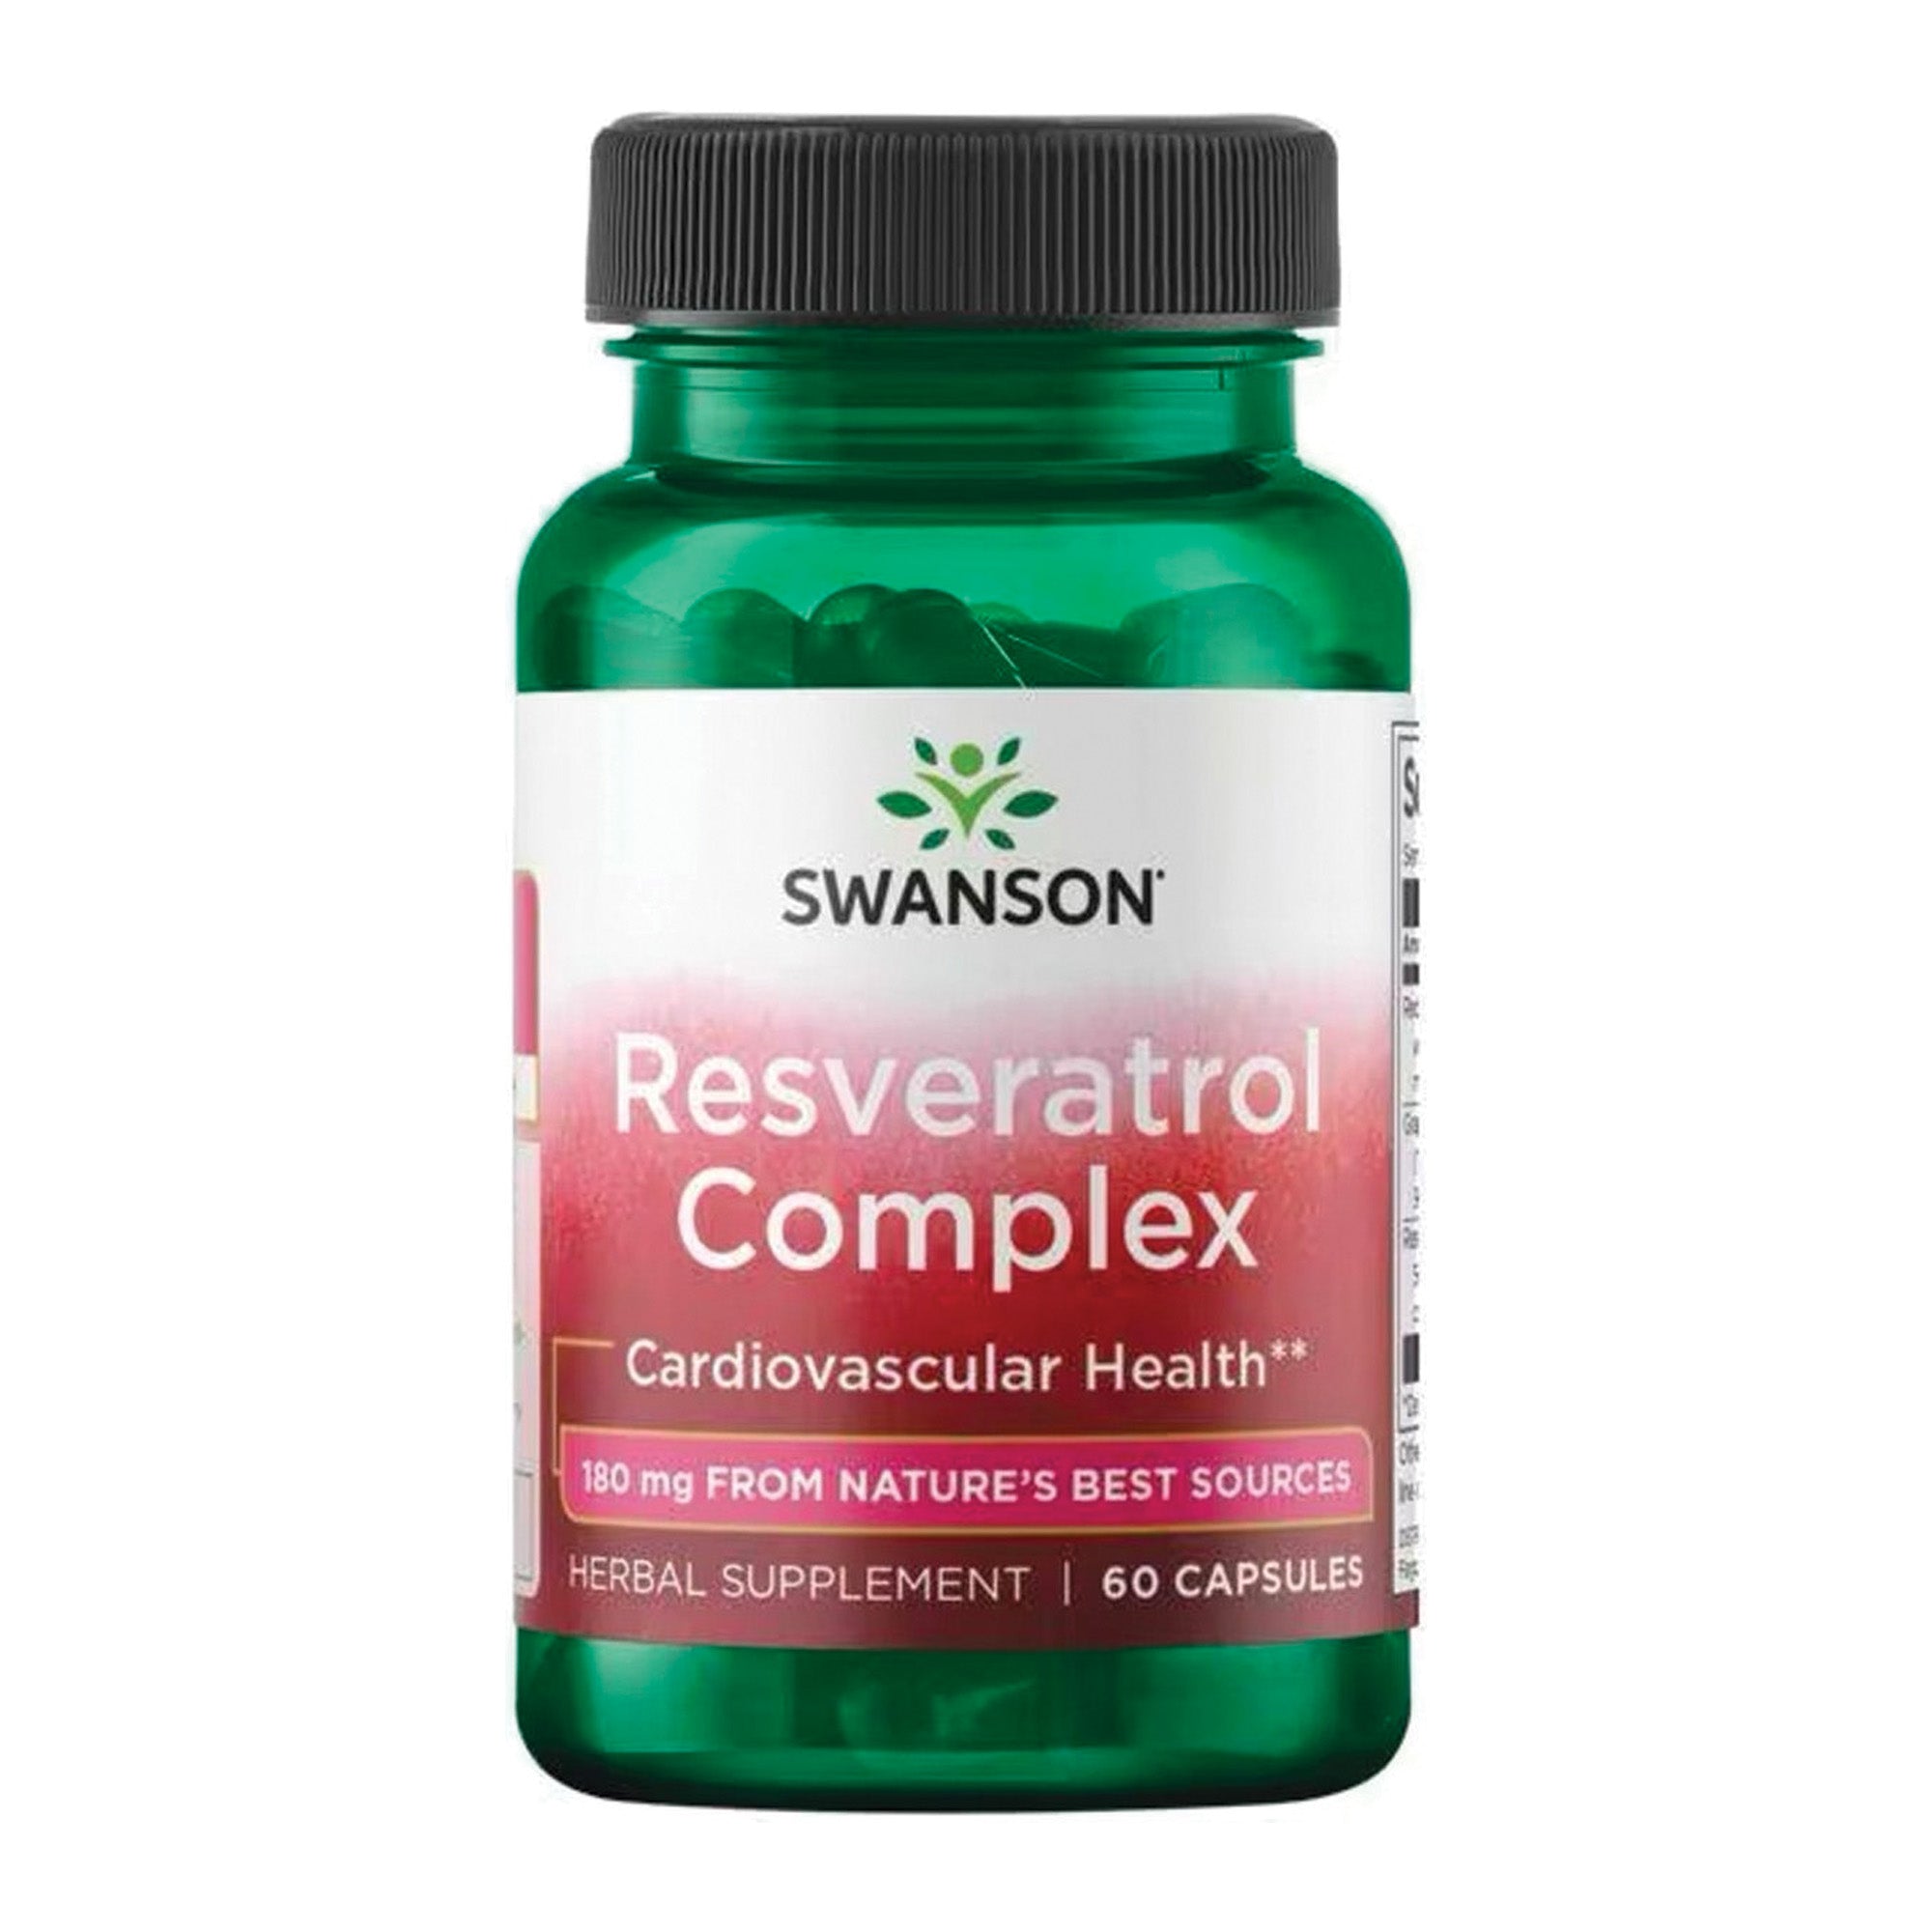 Swanson resveratrol complex